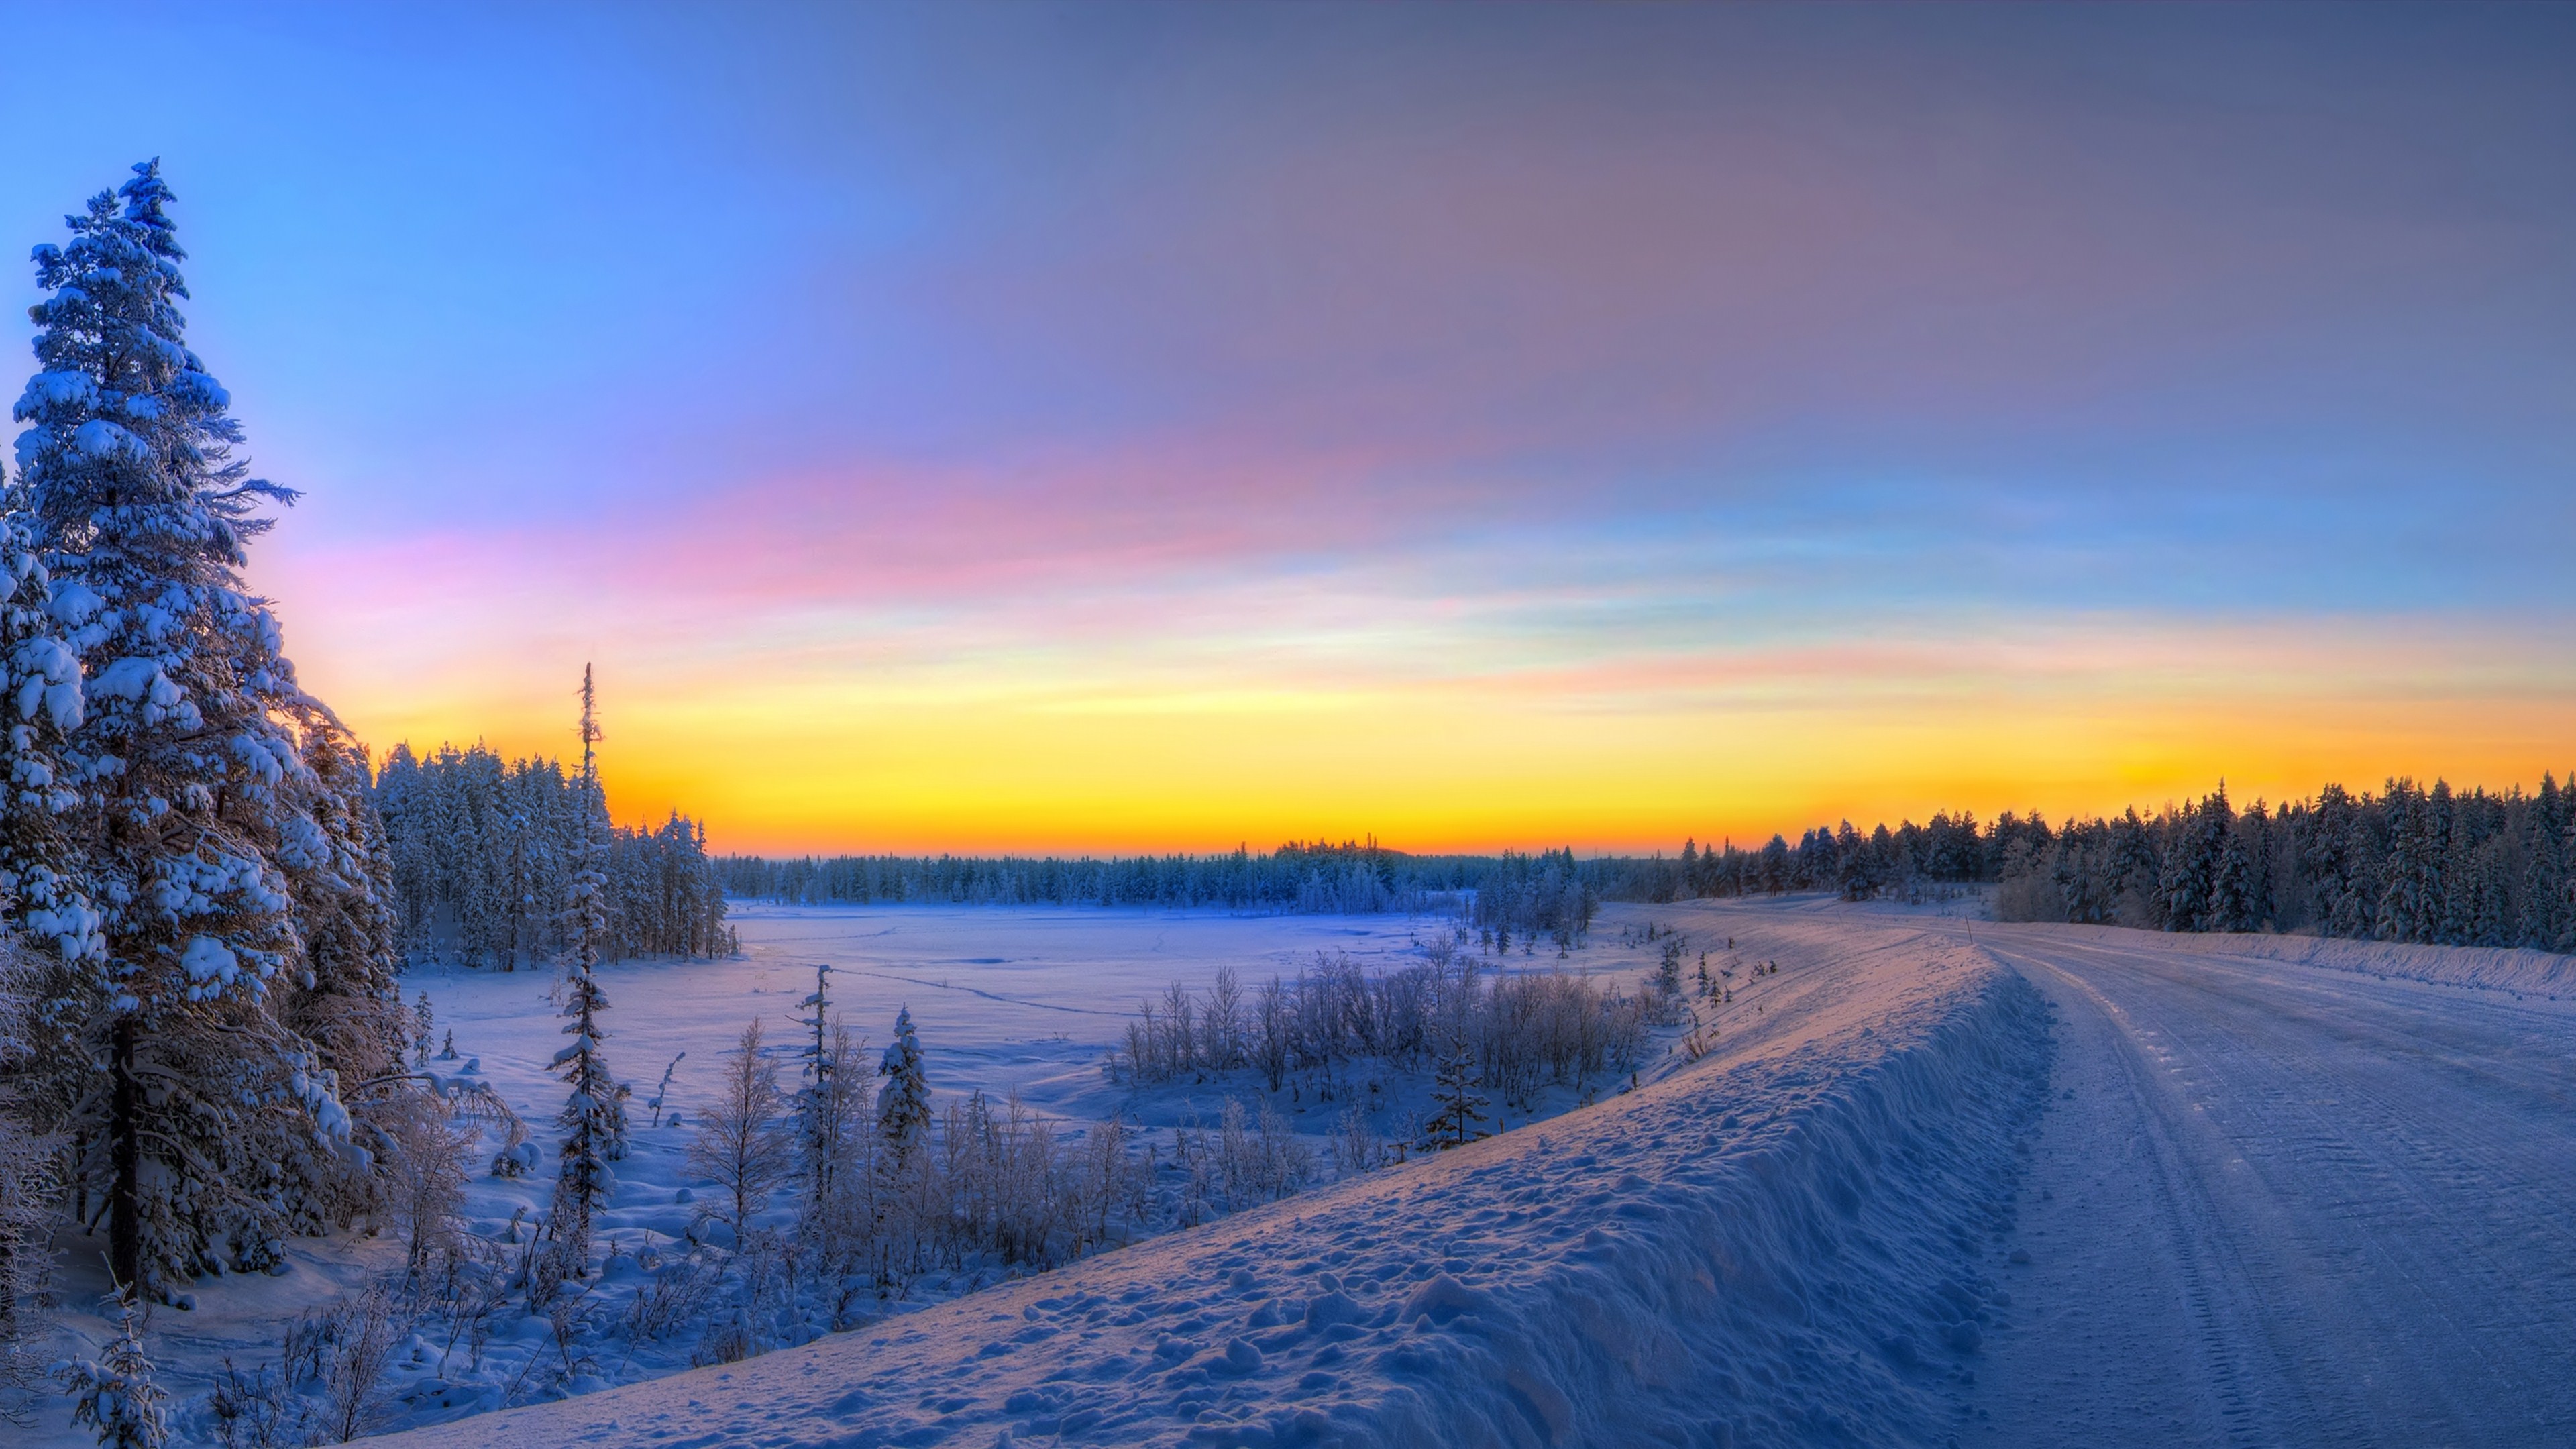 Winter 4k Ultra HD Wallpaper | Background Image | 3840x2160